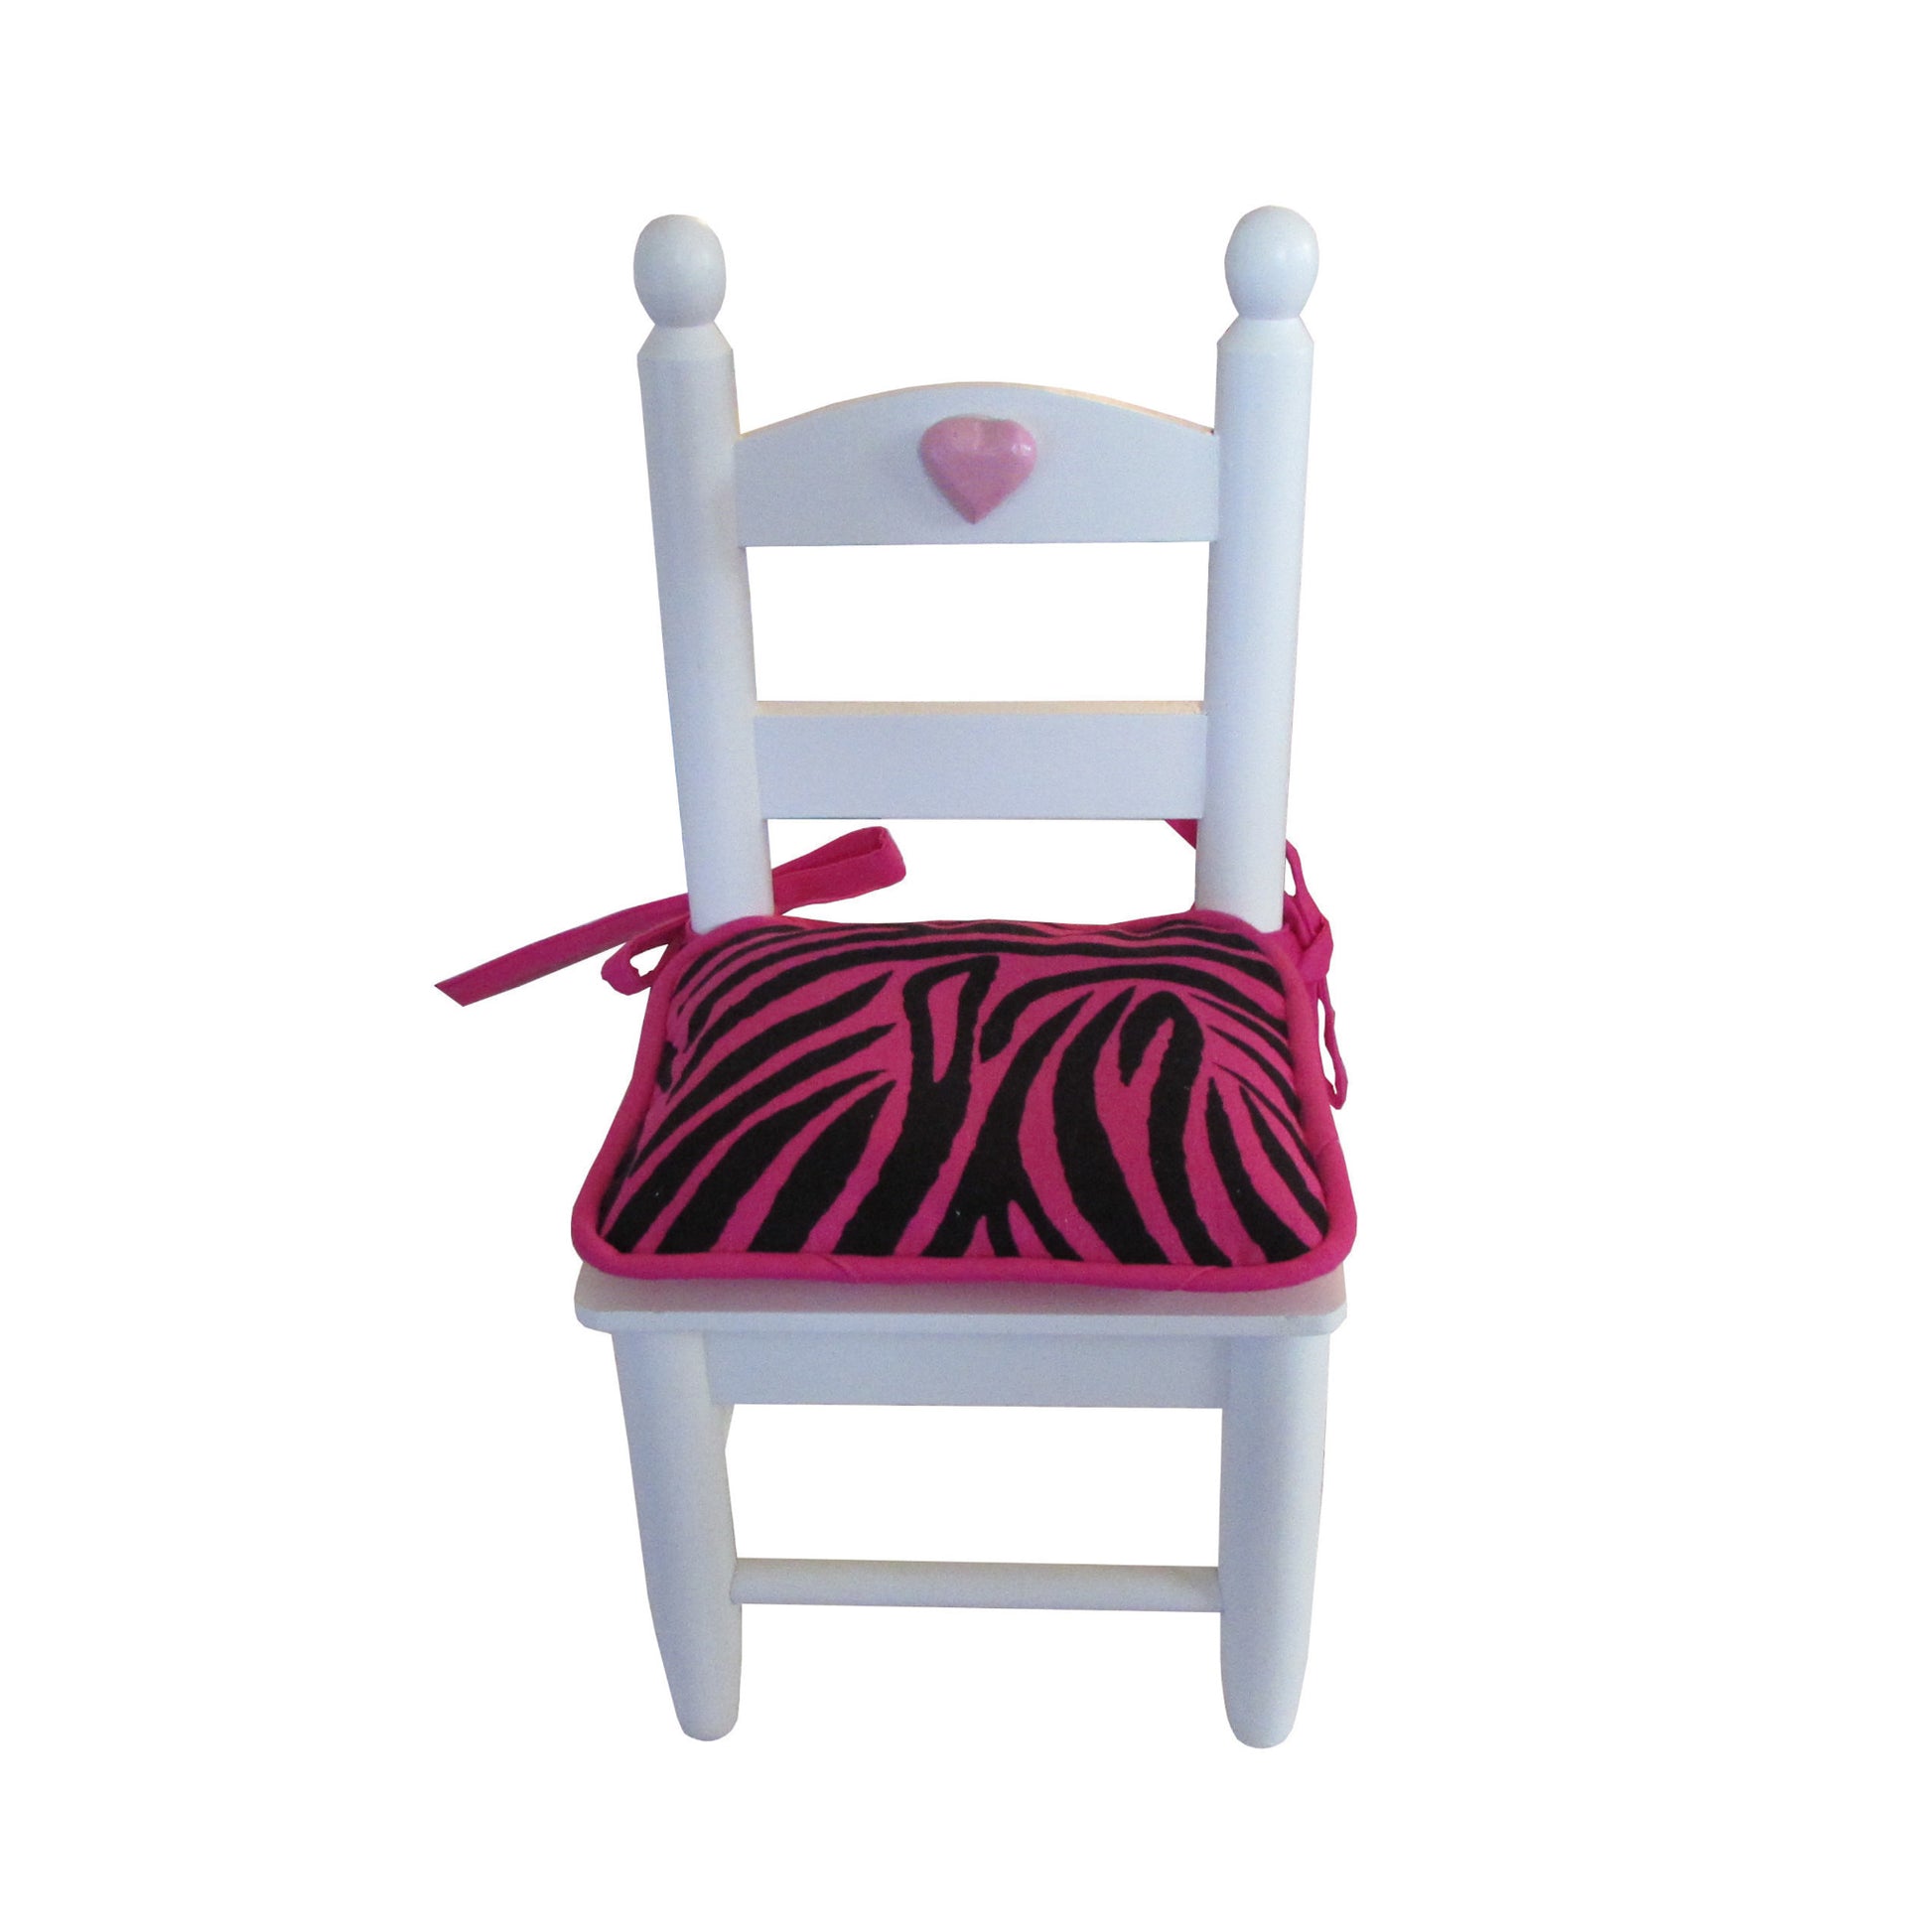 Pink Zebra Print Doll Chair Cushion for 18-inch dolls